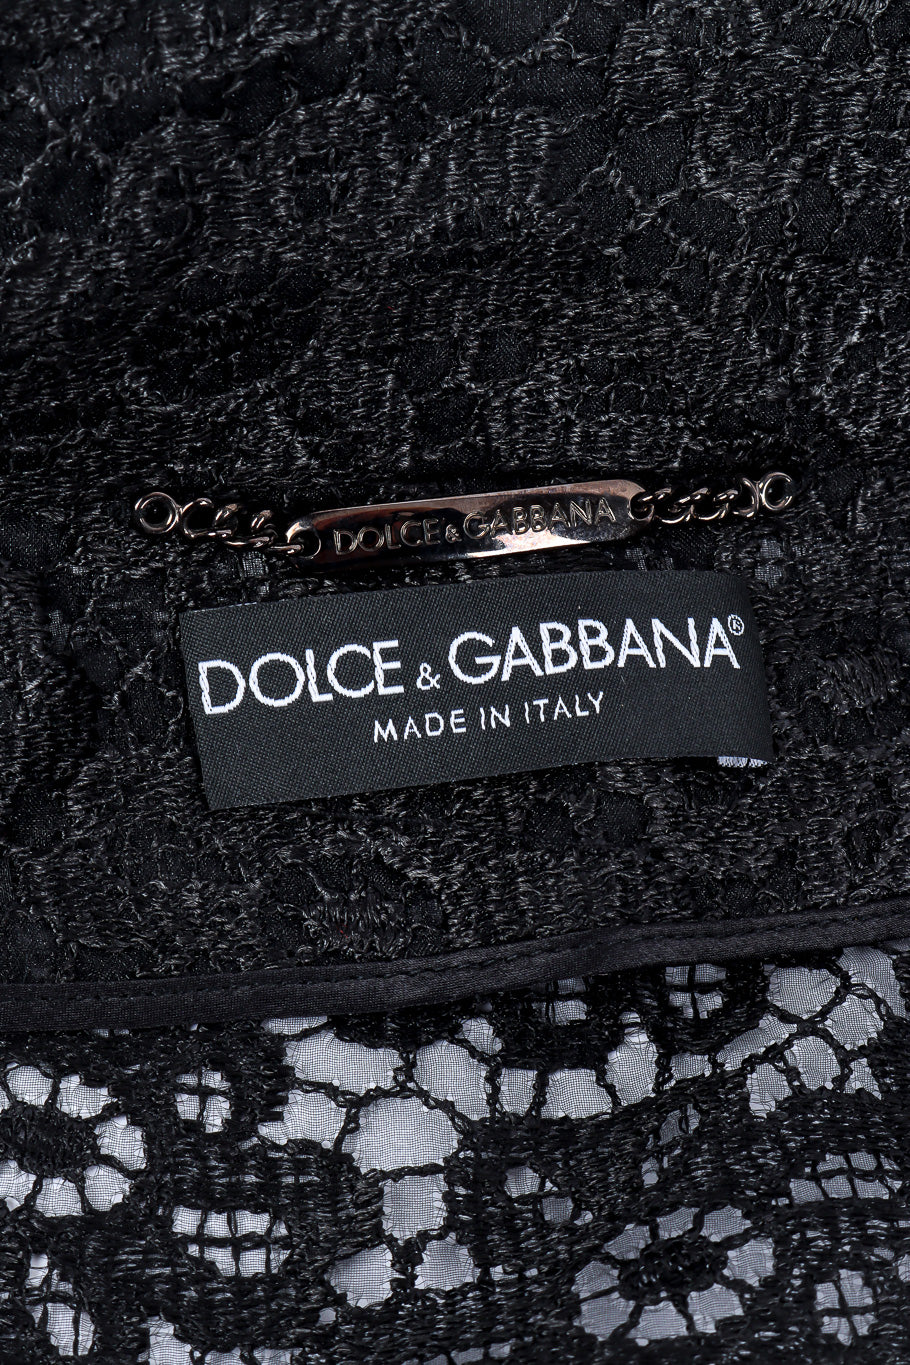 Dolce & Gabbana lace pattern coat designer label @recessla